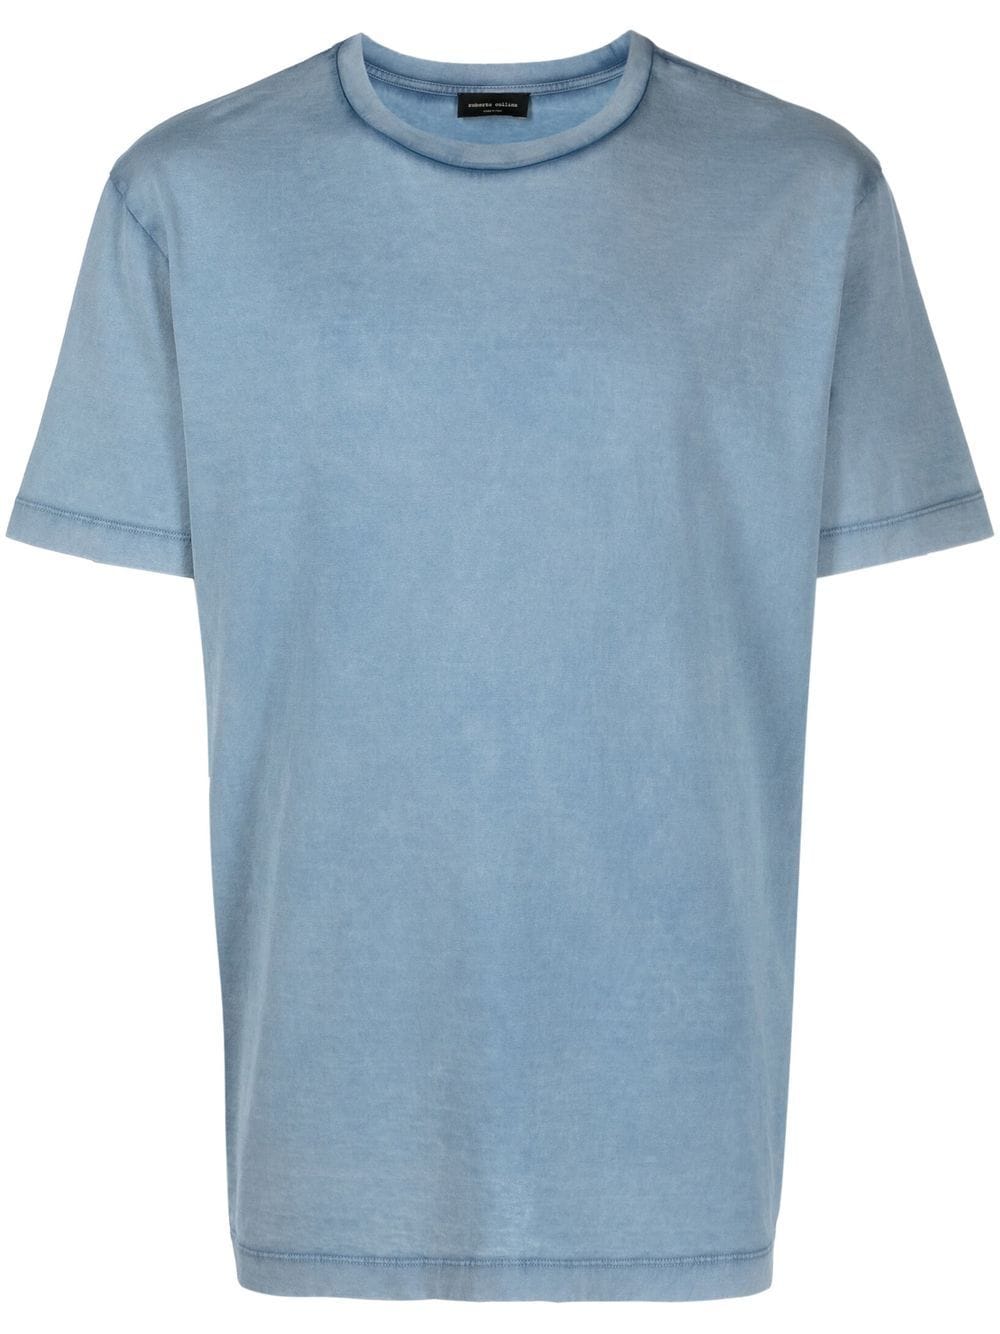 roberto collina t-shirt à effet délavé - bleu